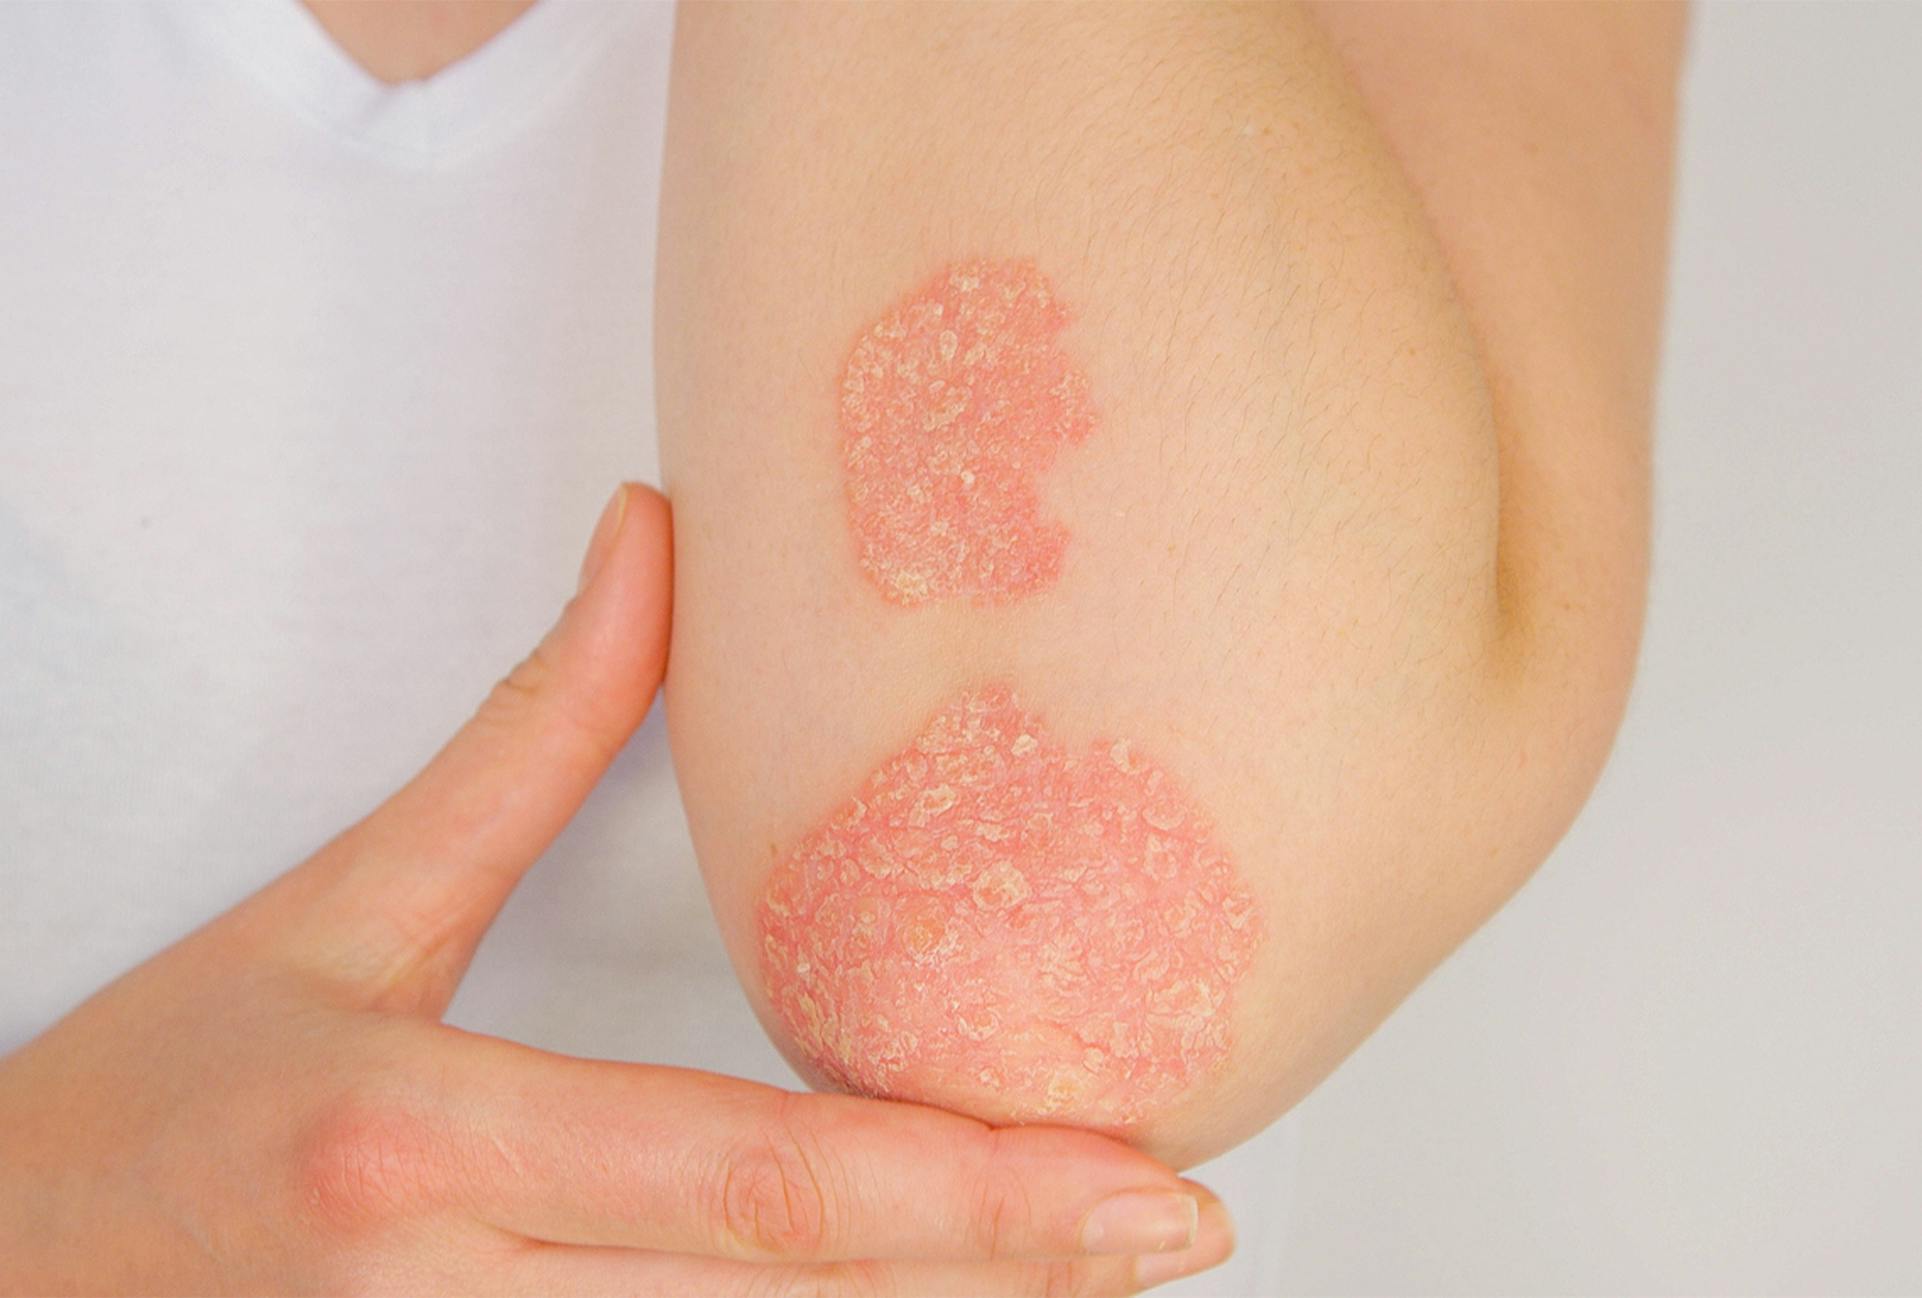 Nedrustning Ud over Mursten Psoriasis | The Dermatology Center